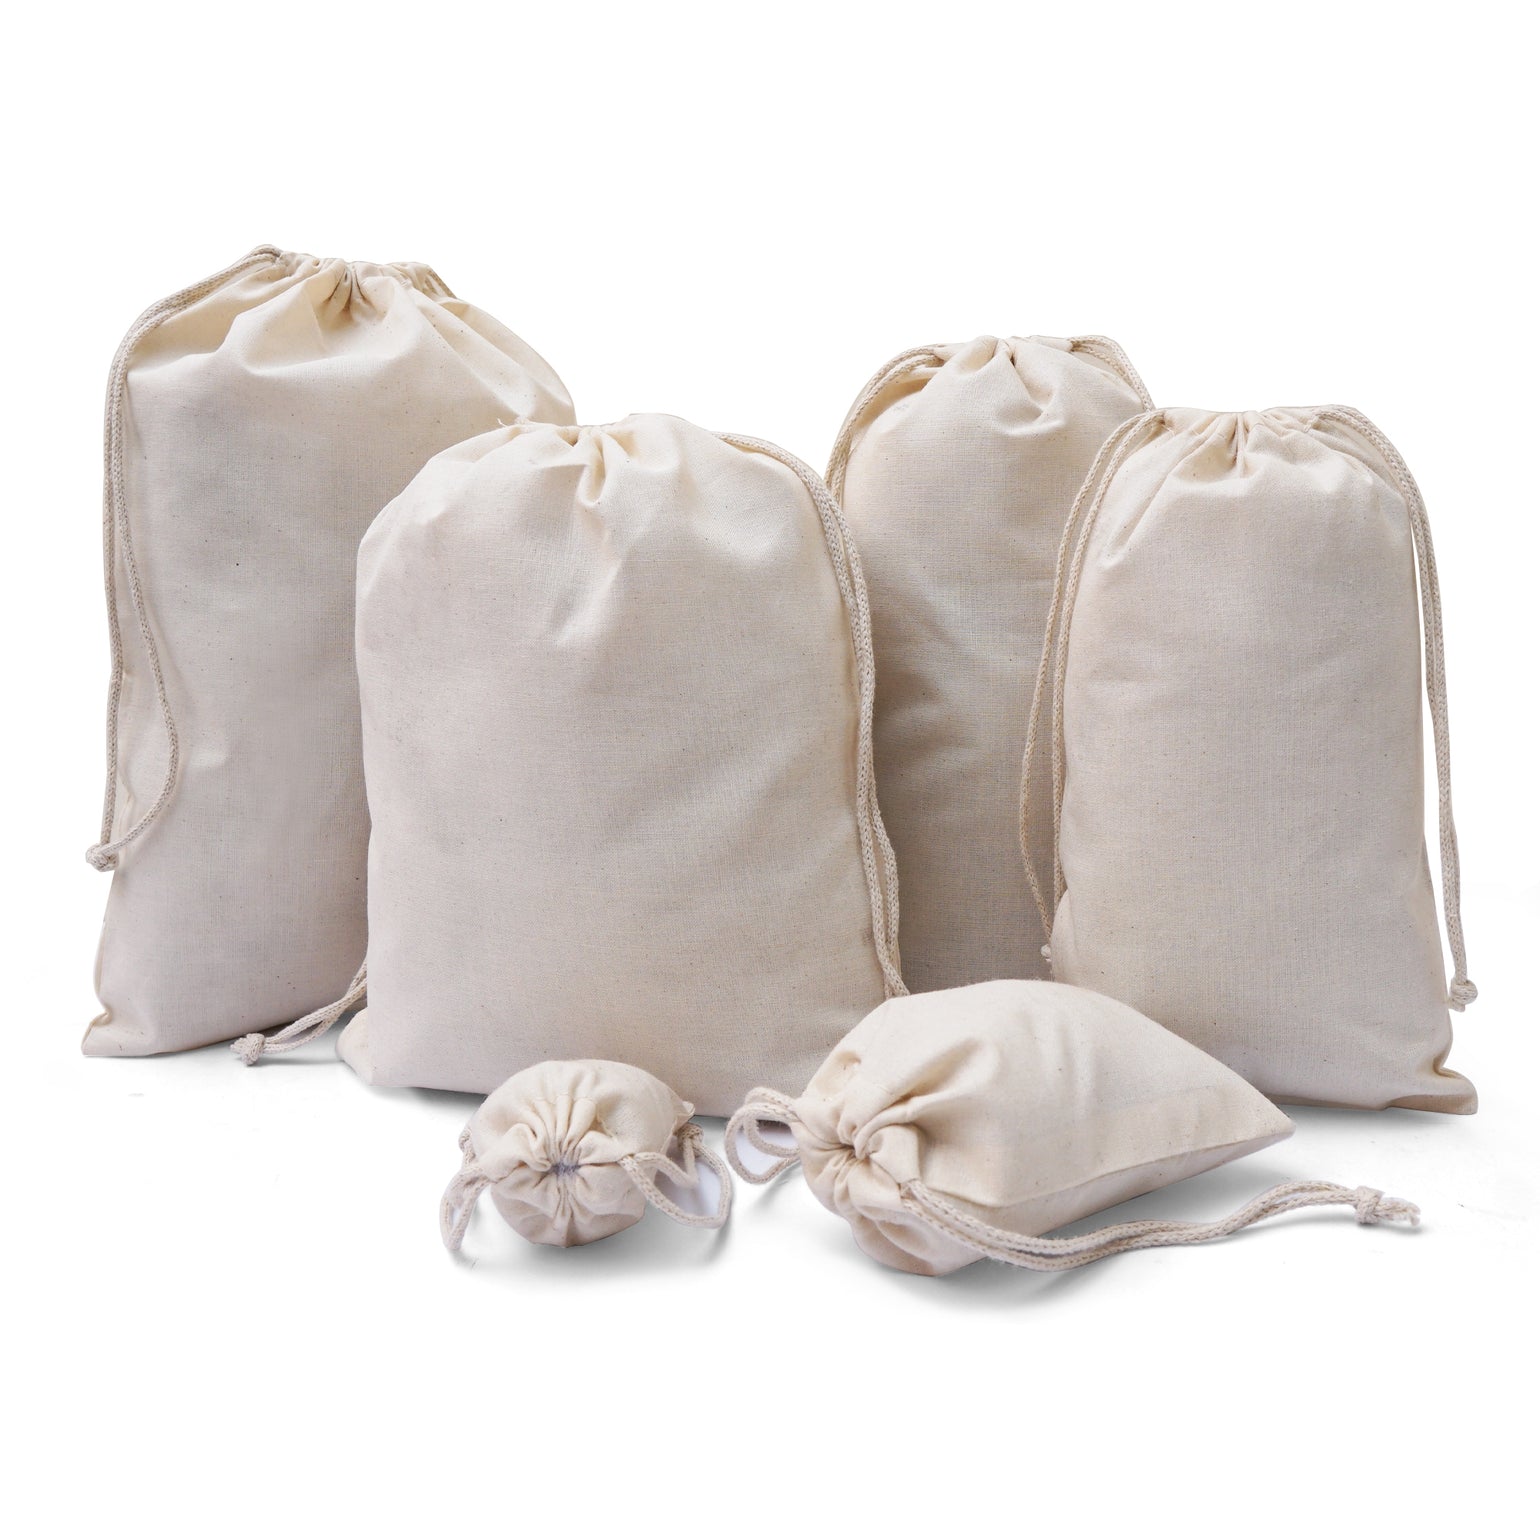 Biglotbags - Wholesale Muslin Bags - Leading Manufacturer of Reusable ...